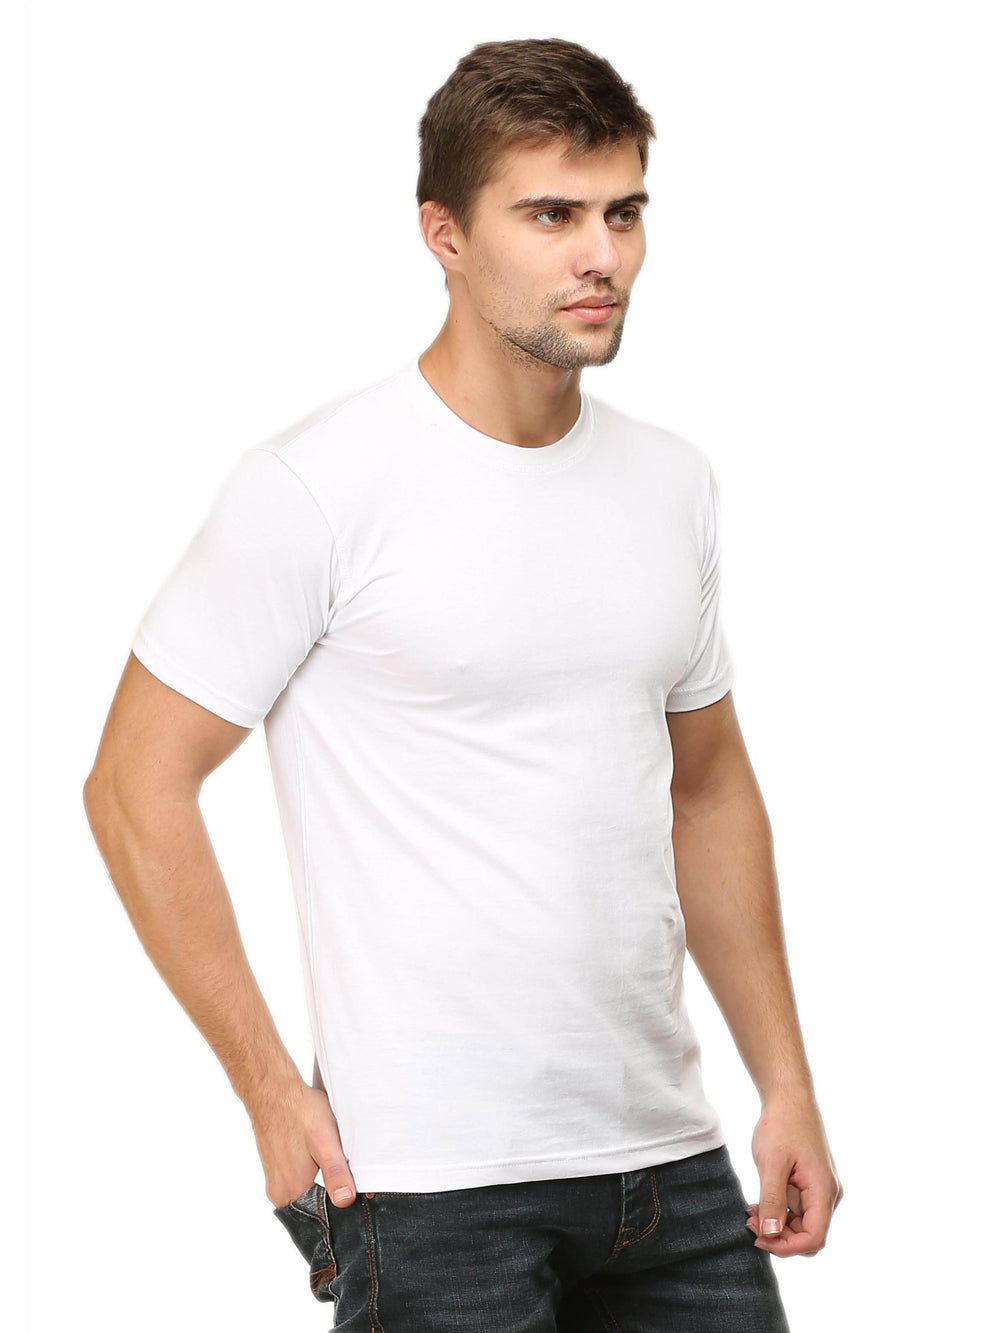 Solids : Premium White Unisex T -shirt